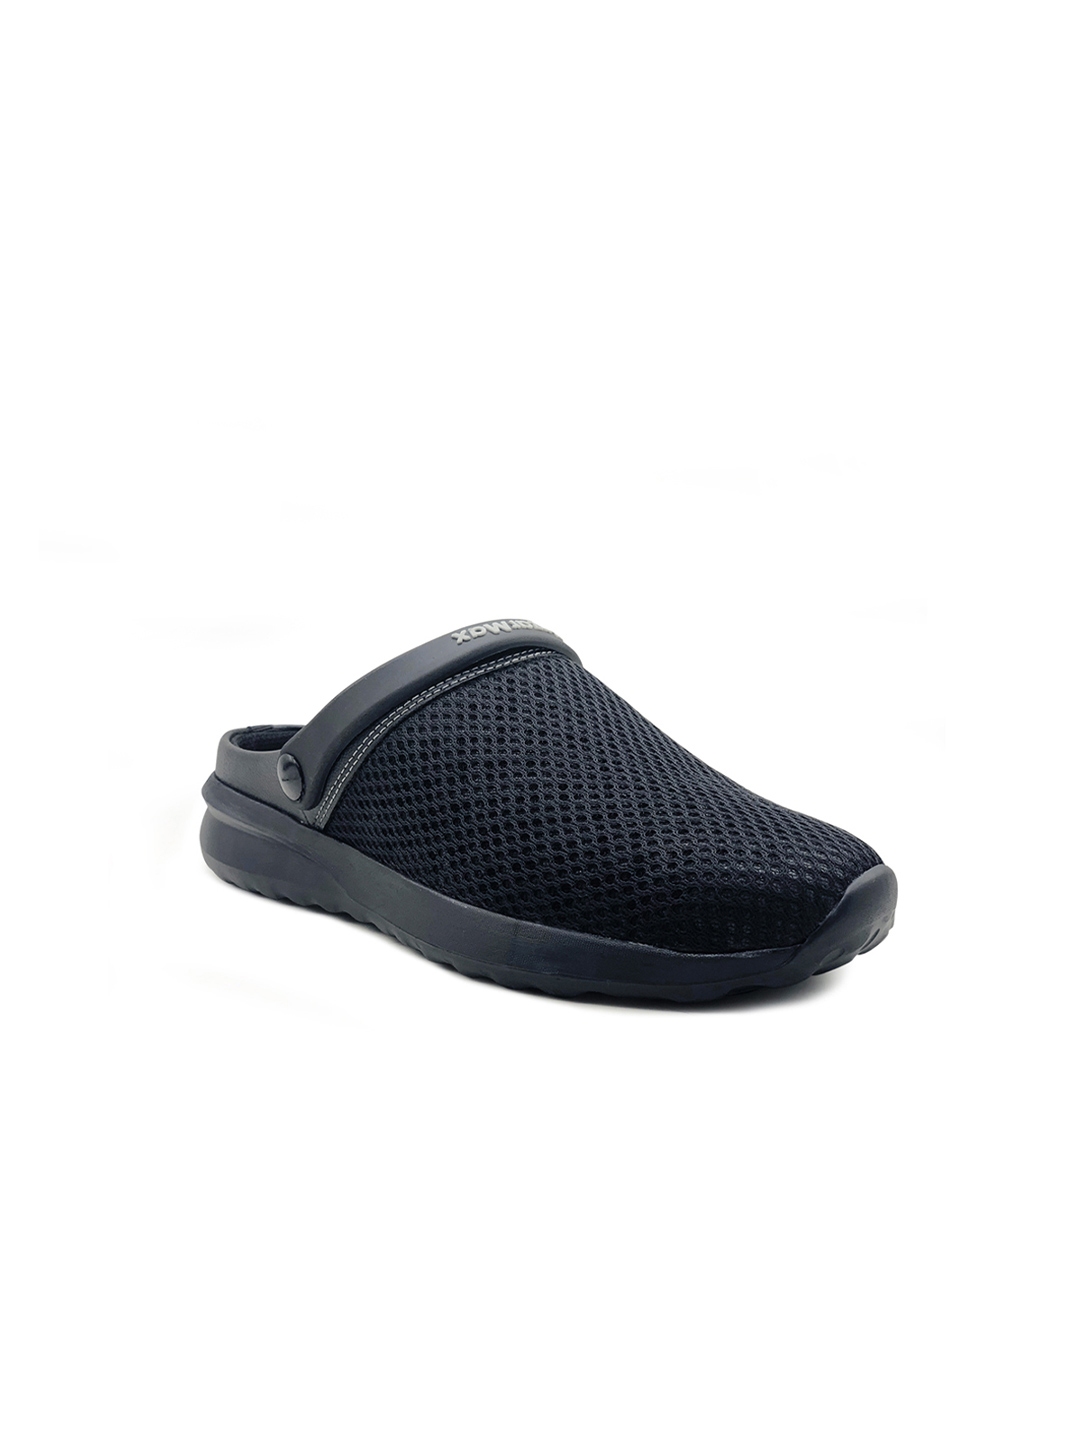 Buy KazarMax Men Black Clogs Sandals - Sandals for Men 17665130 | Myntra